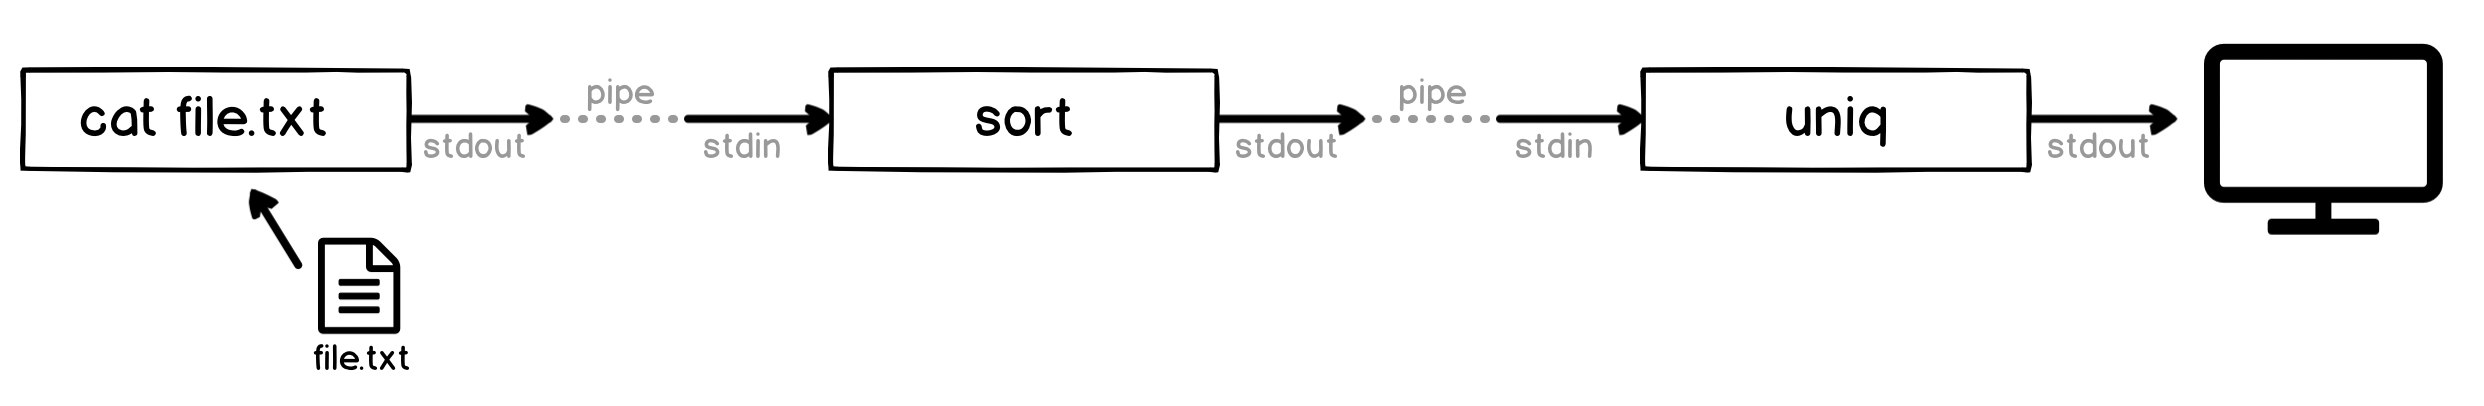 https://effective-shell.com/assets/images/diagram-cat-sort-uniq-pipeline-8c8d76566f351b4b9b900dde52af86b3.png